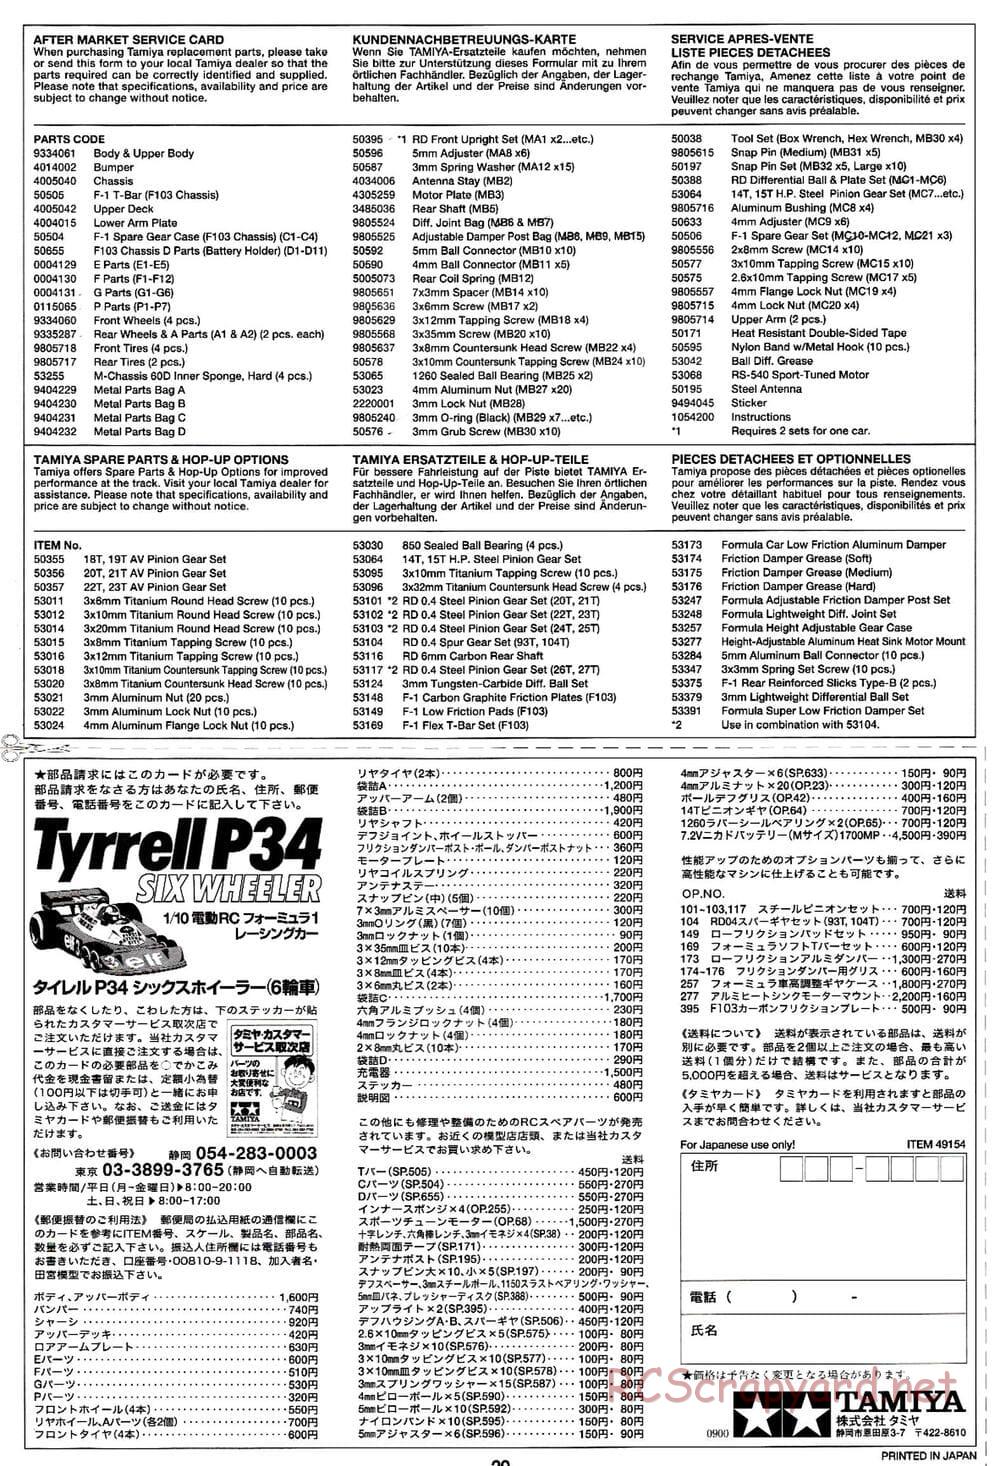 Tamiya - Tyrrell P34 Six Wheeler - F103-6W Chassis - Manual - Page 20